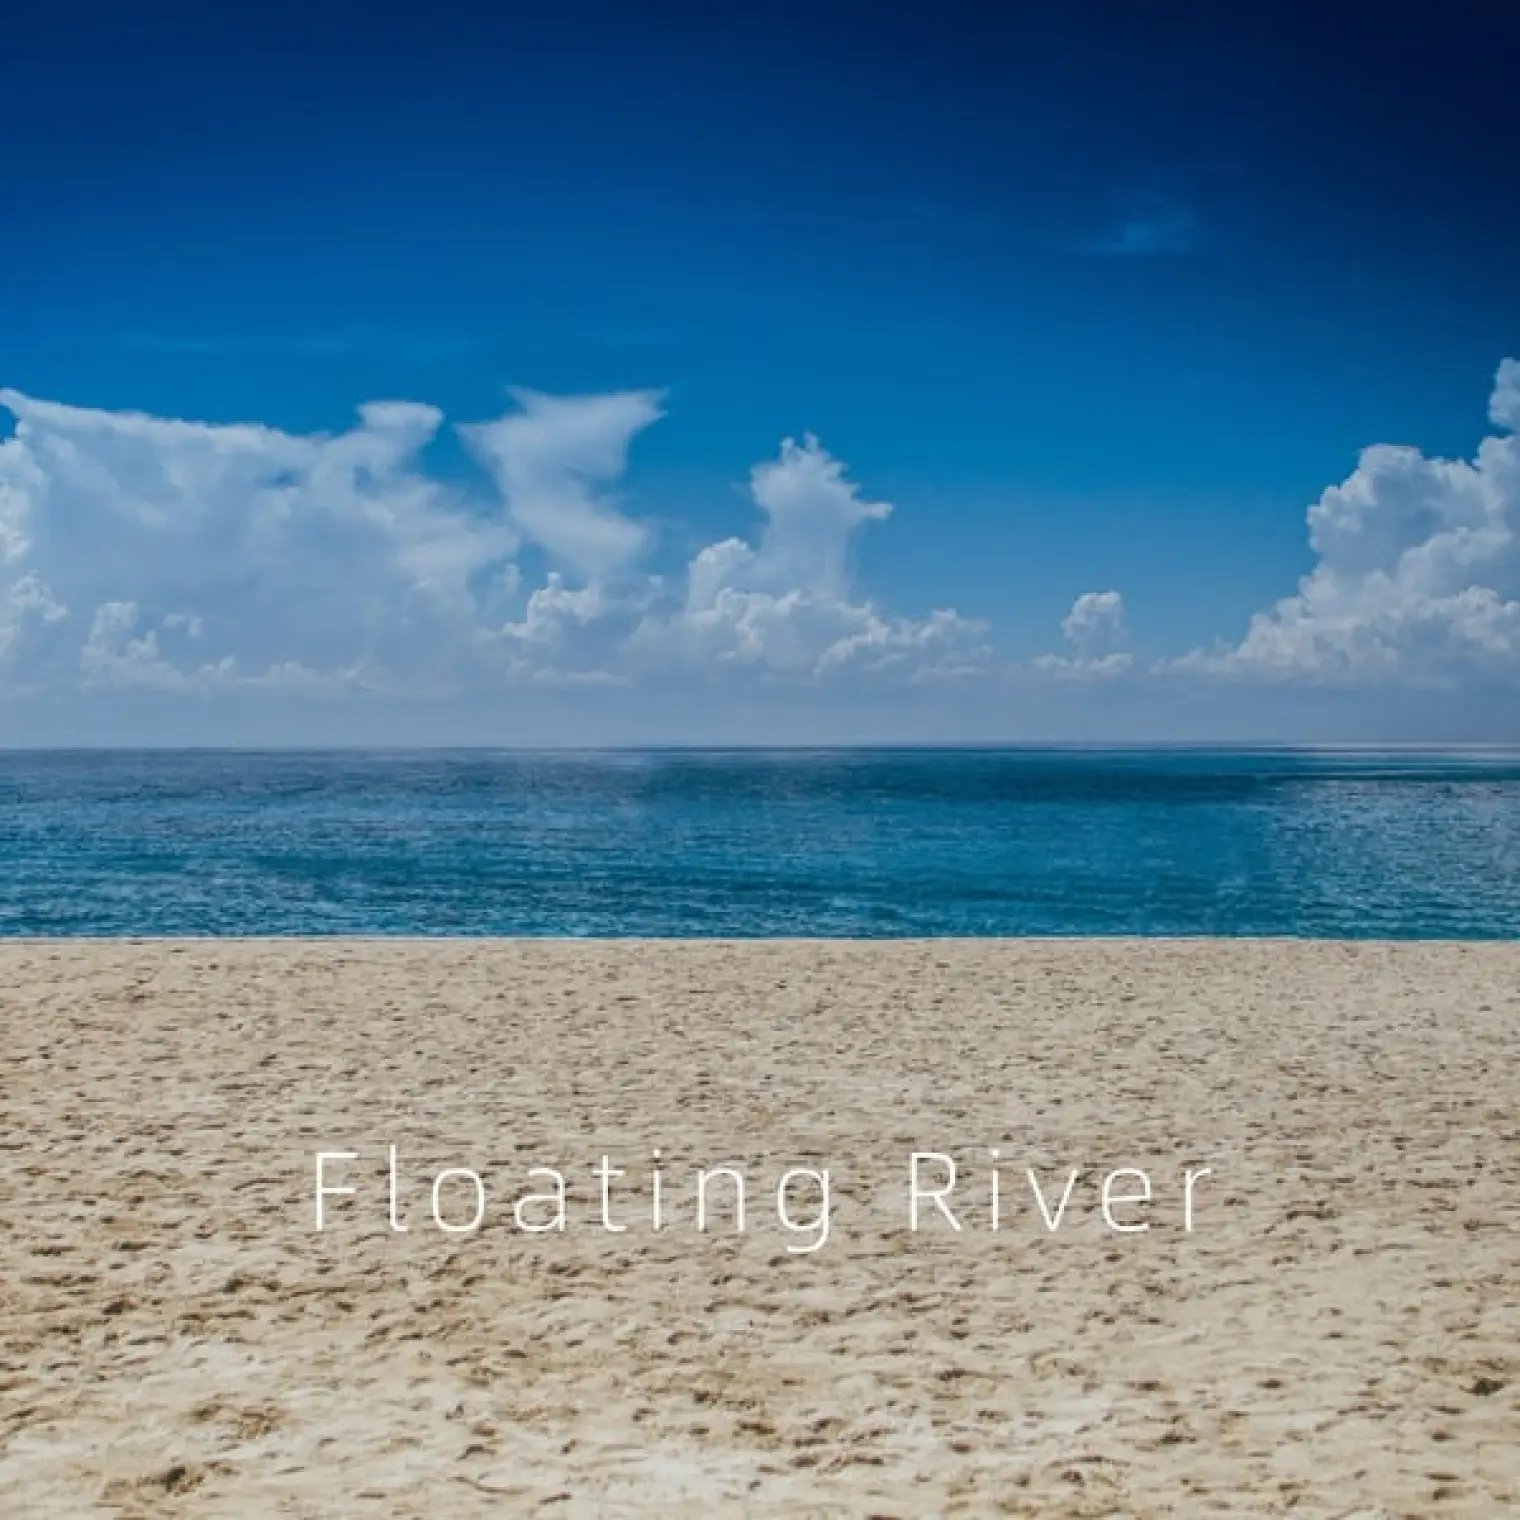 Floating River -  Elaine 